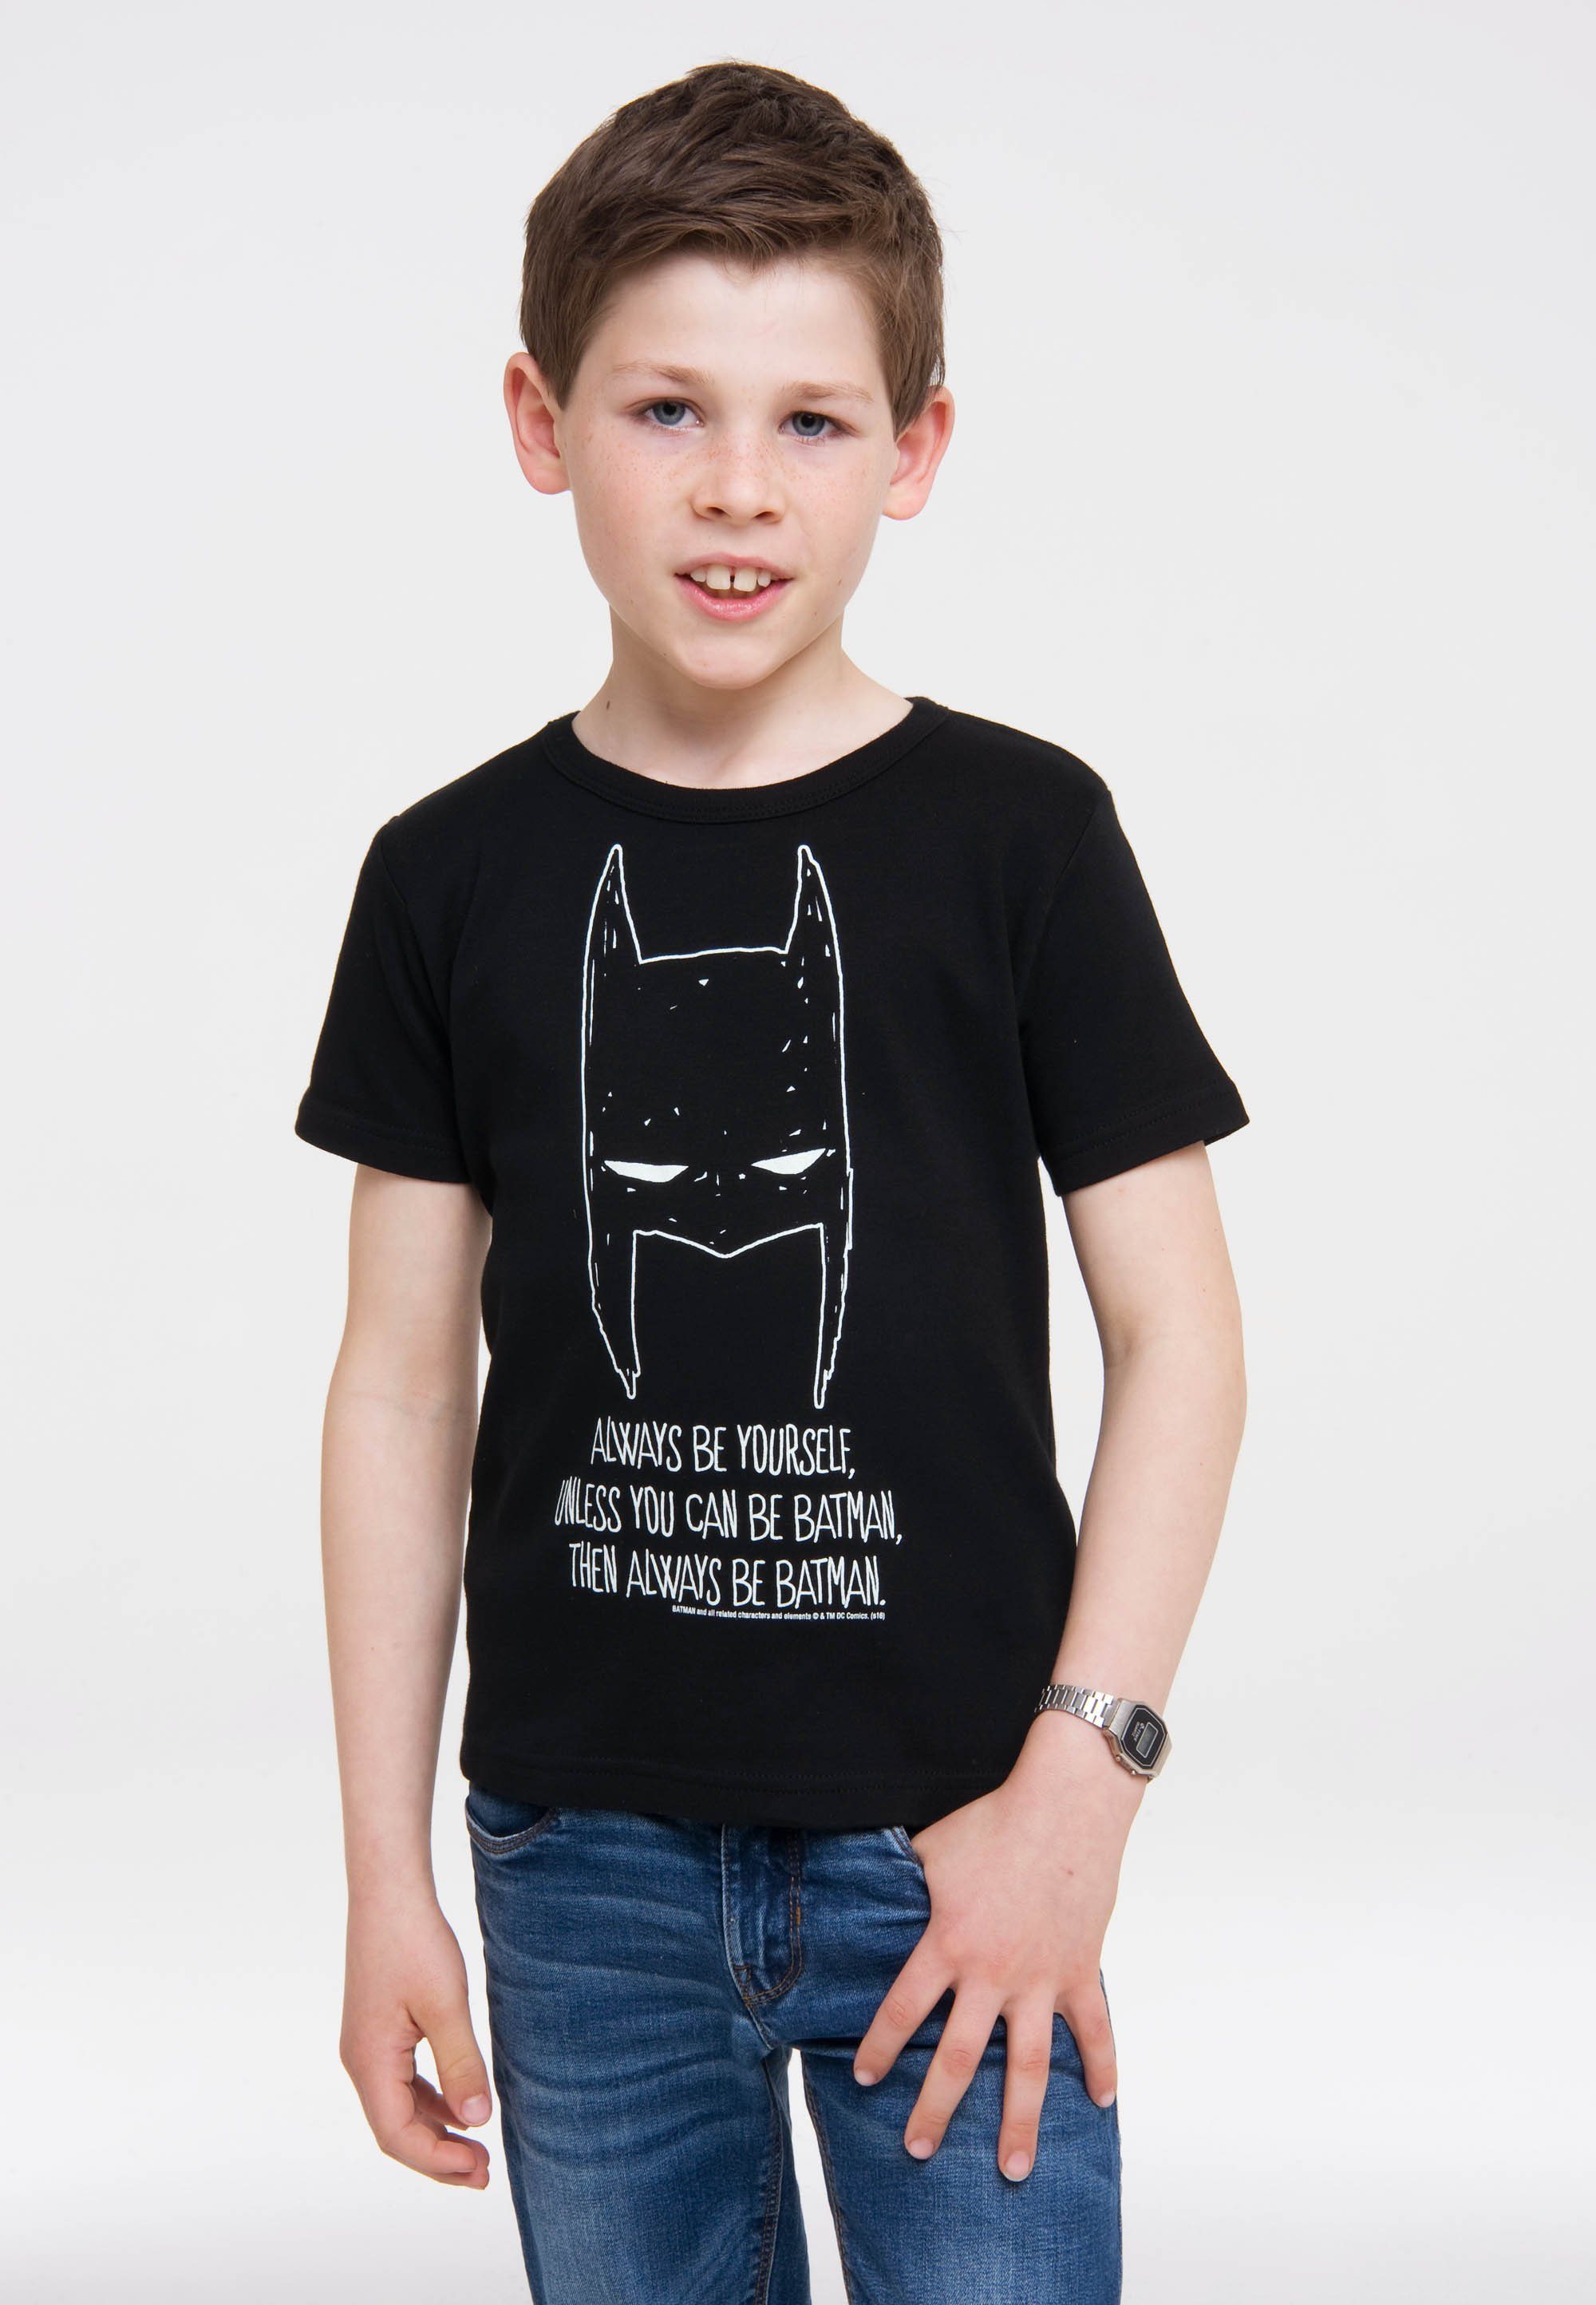 Batman LOGOSHIRT Yourself Always - DC - coolem mit Batman-Print Be T-Shirt